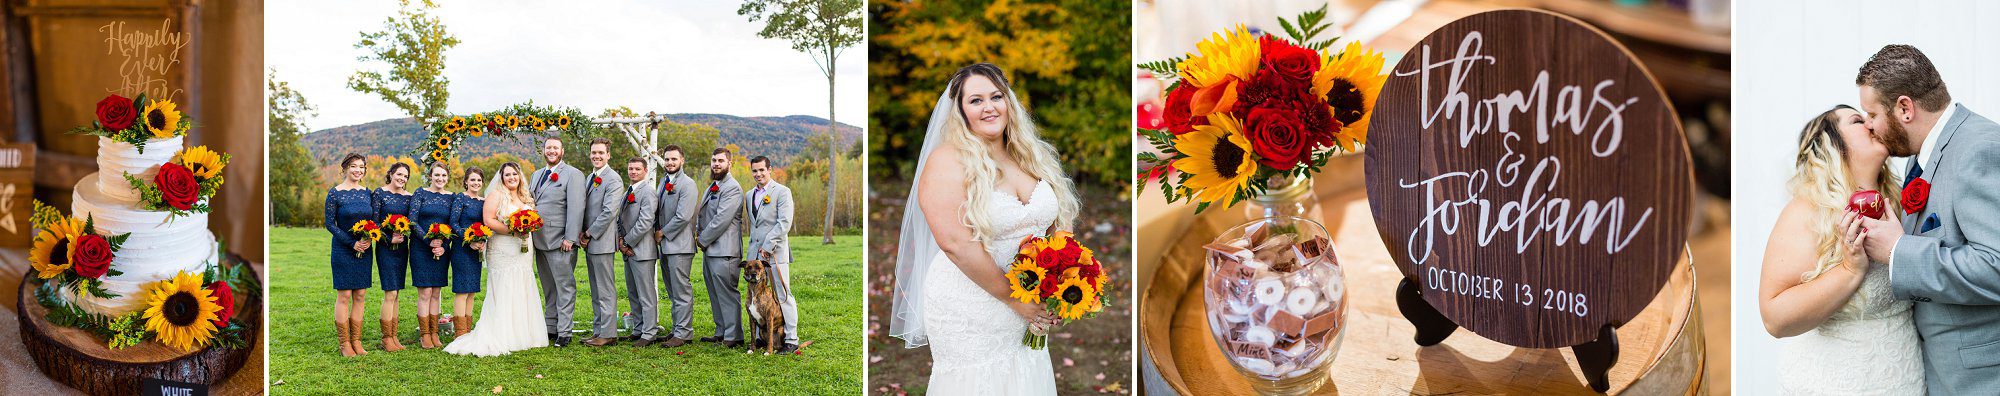 tumbledown farms wedding photography review